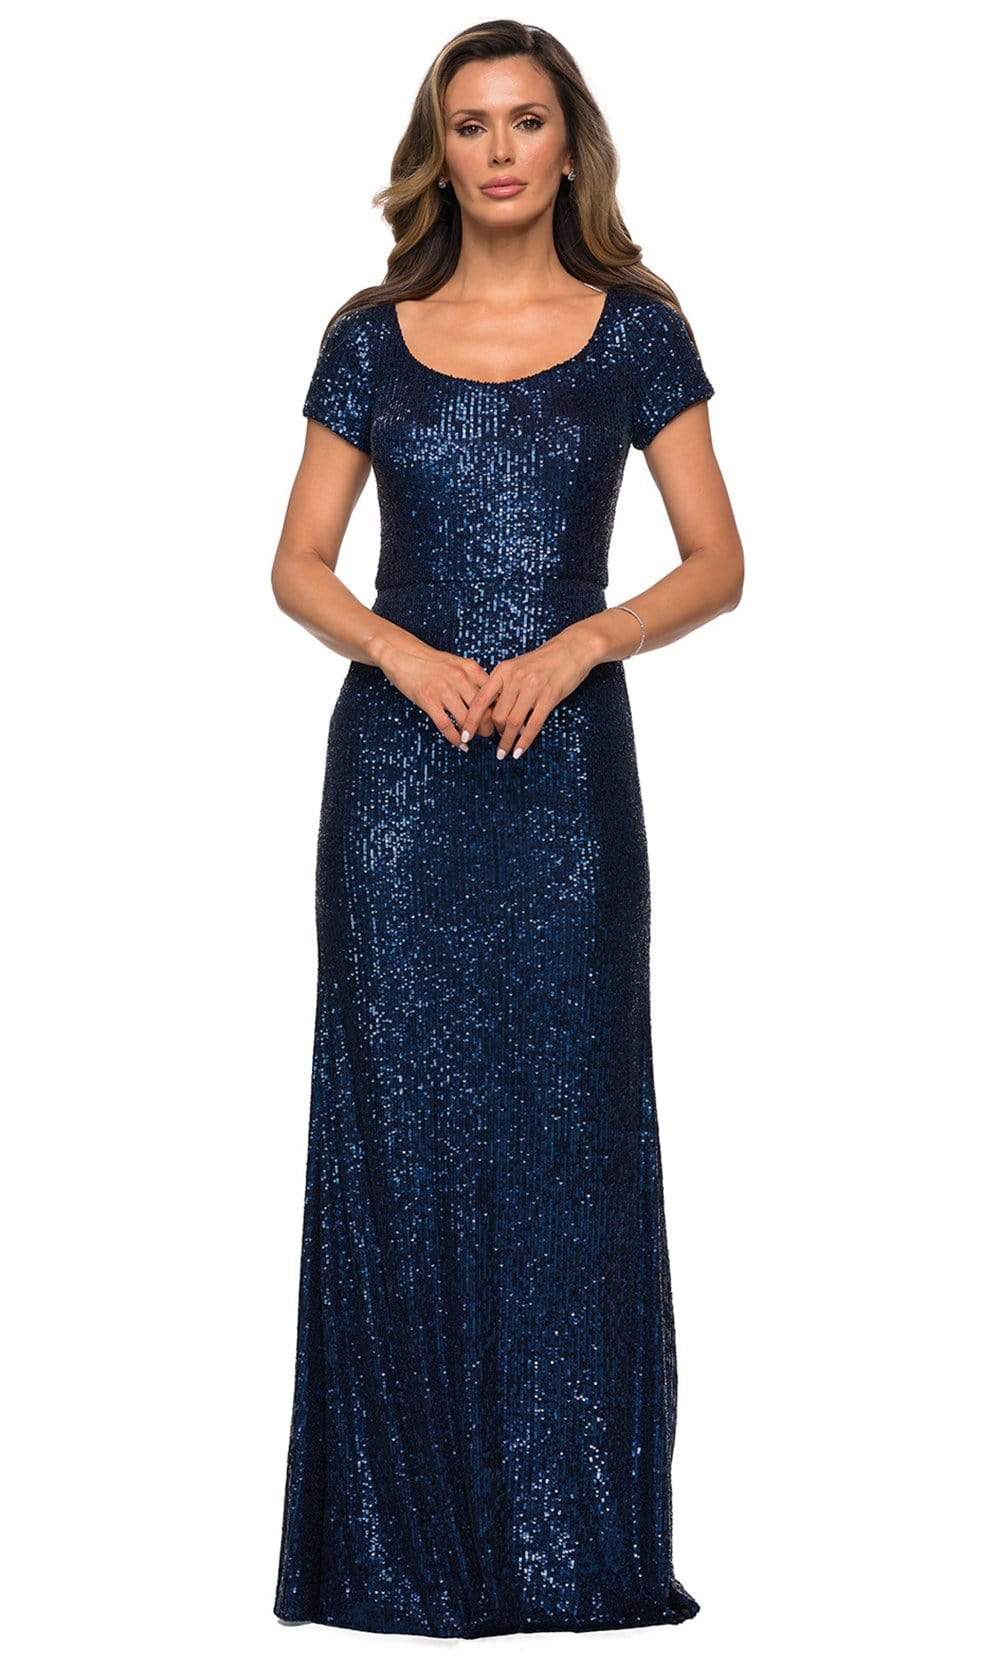 La Femme - 27916 Allover Sequins Short Sleeve Evening Gown
